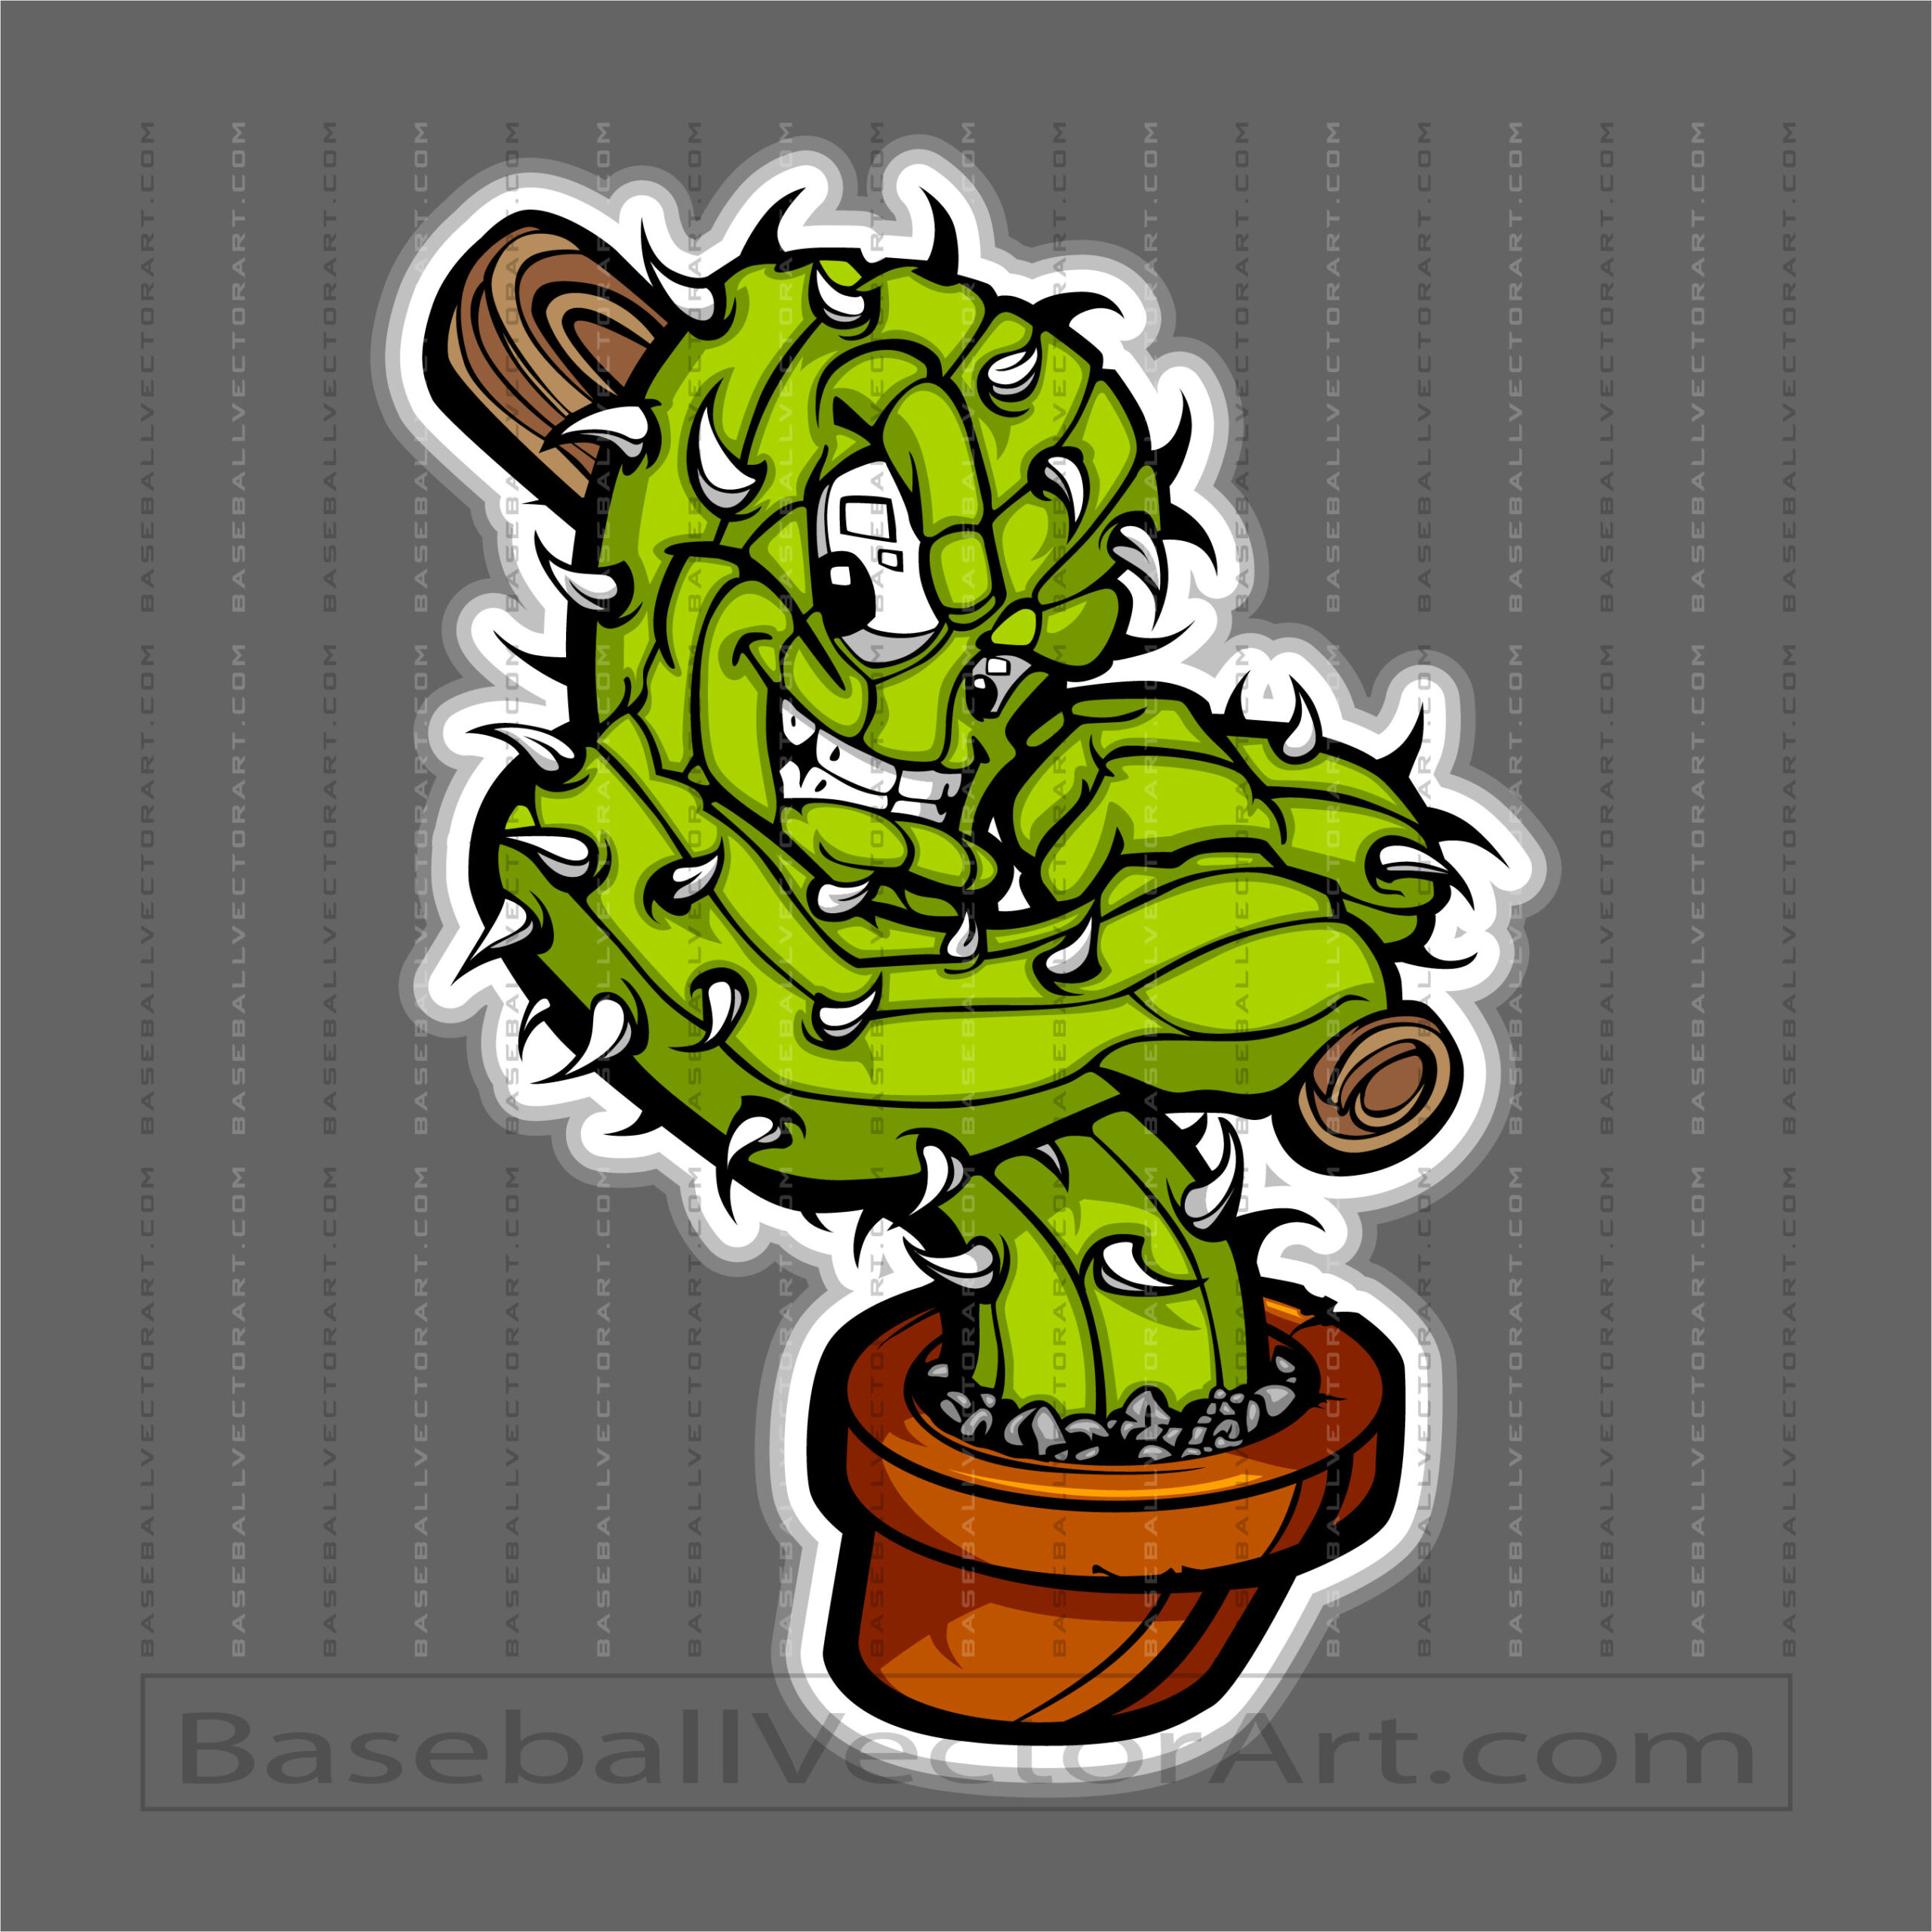 Baseball Cactus Graphic